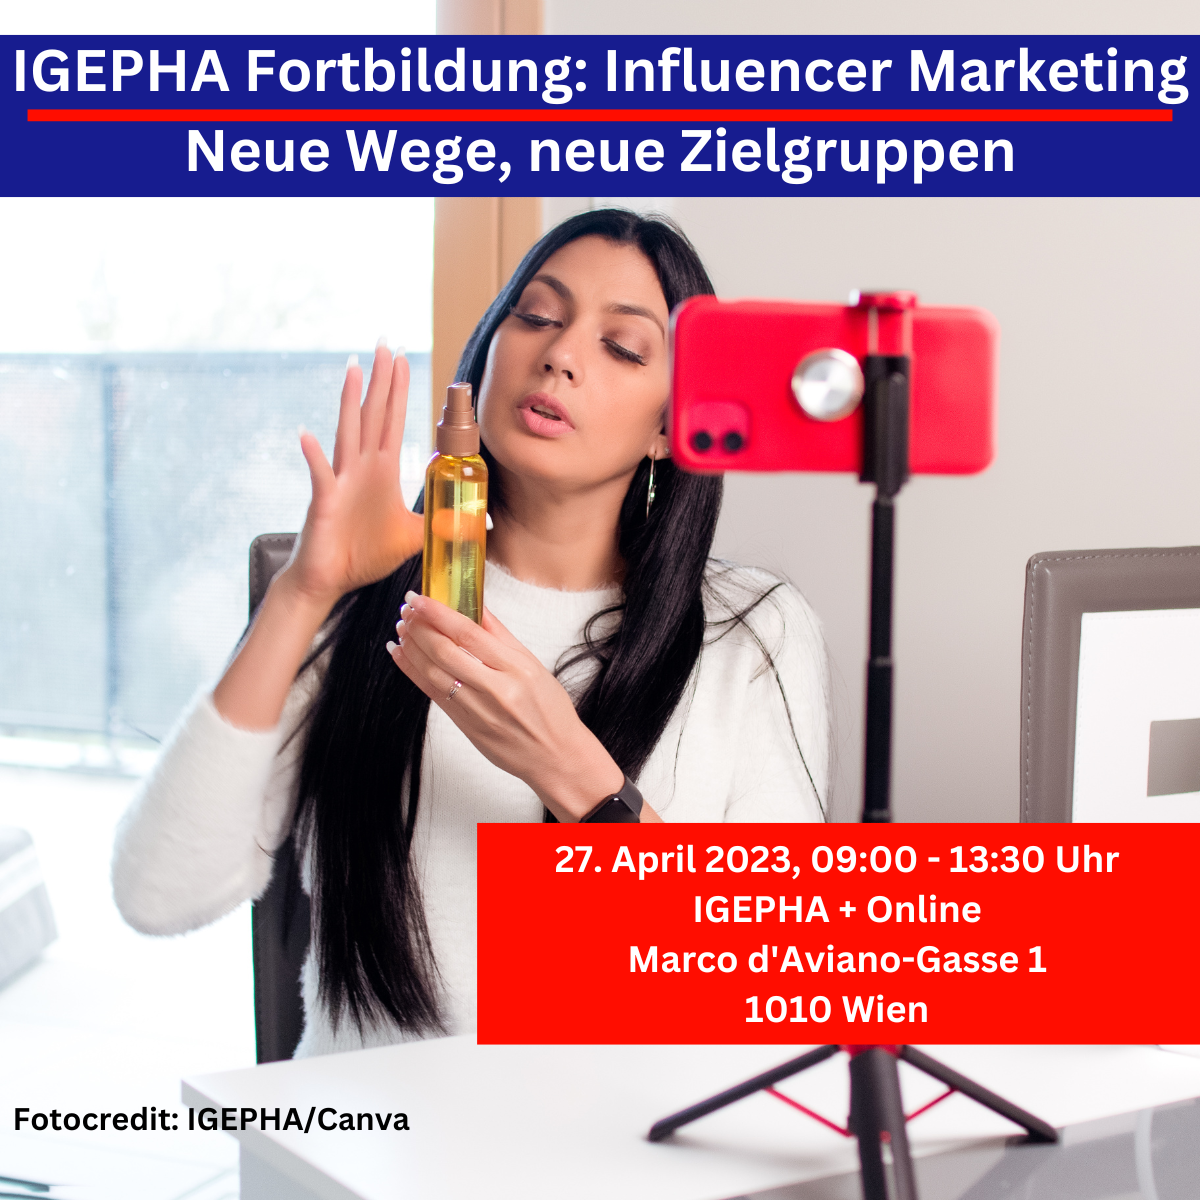 IGEPHA Fortbildung Influencer Marketing Neue Wege, neue Zielgruppen